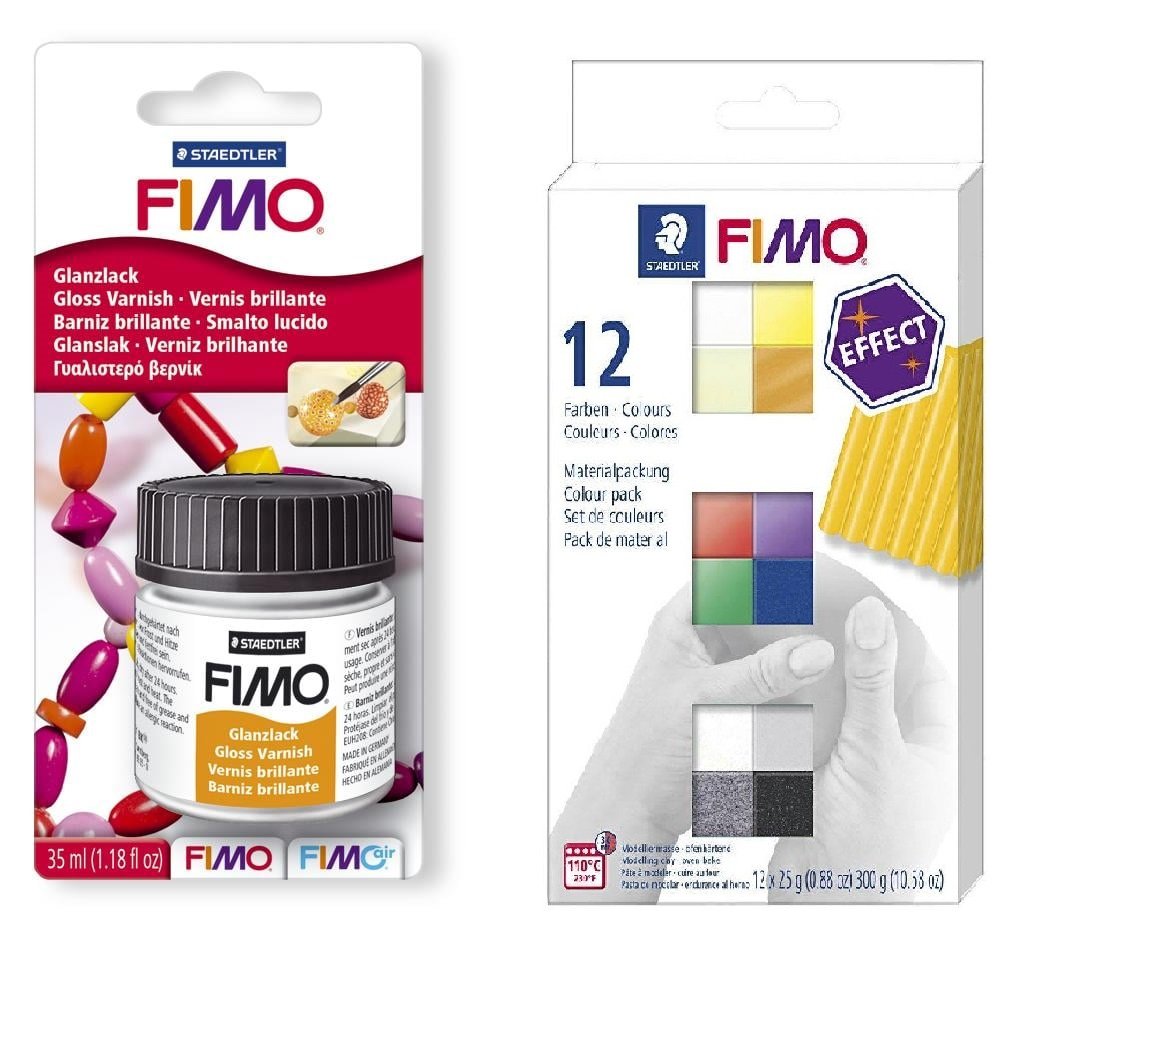 FIMO - Acces Gloss Lak 35ml & Effekt 12 Farver